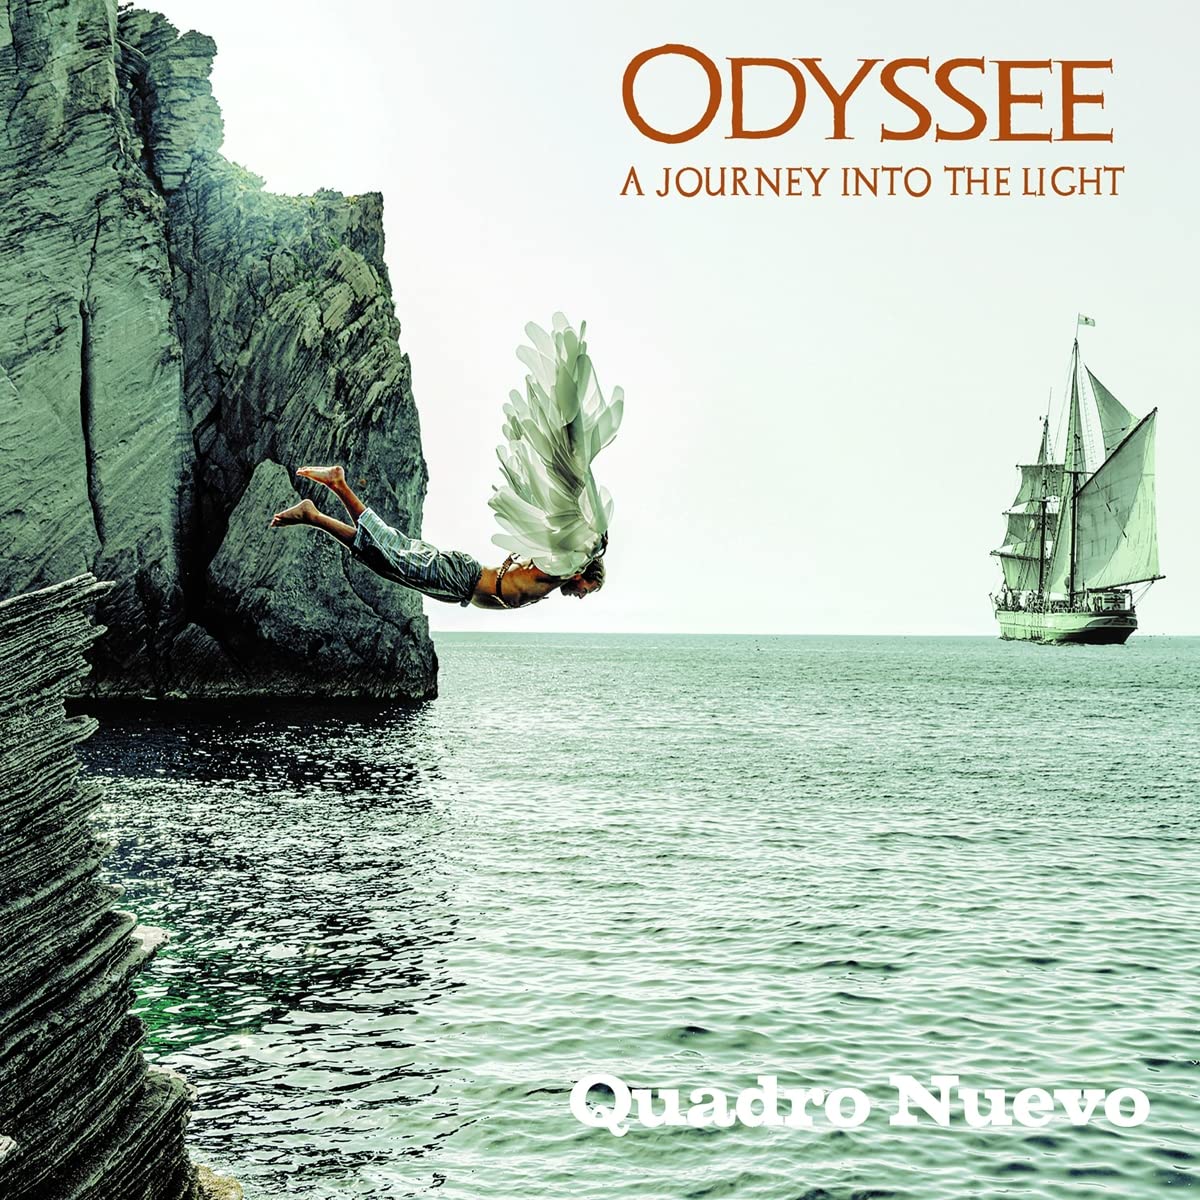 QUADRO NUEVO - Odyssee-a Journey Into the Light cover 